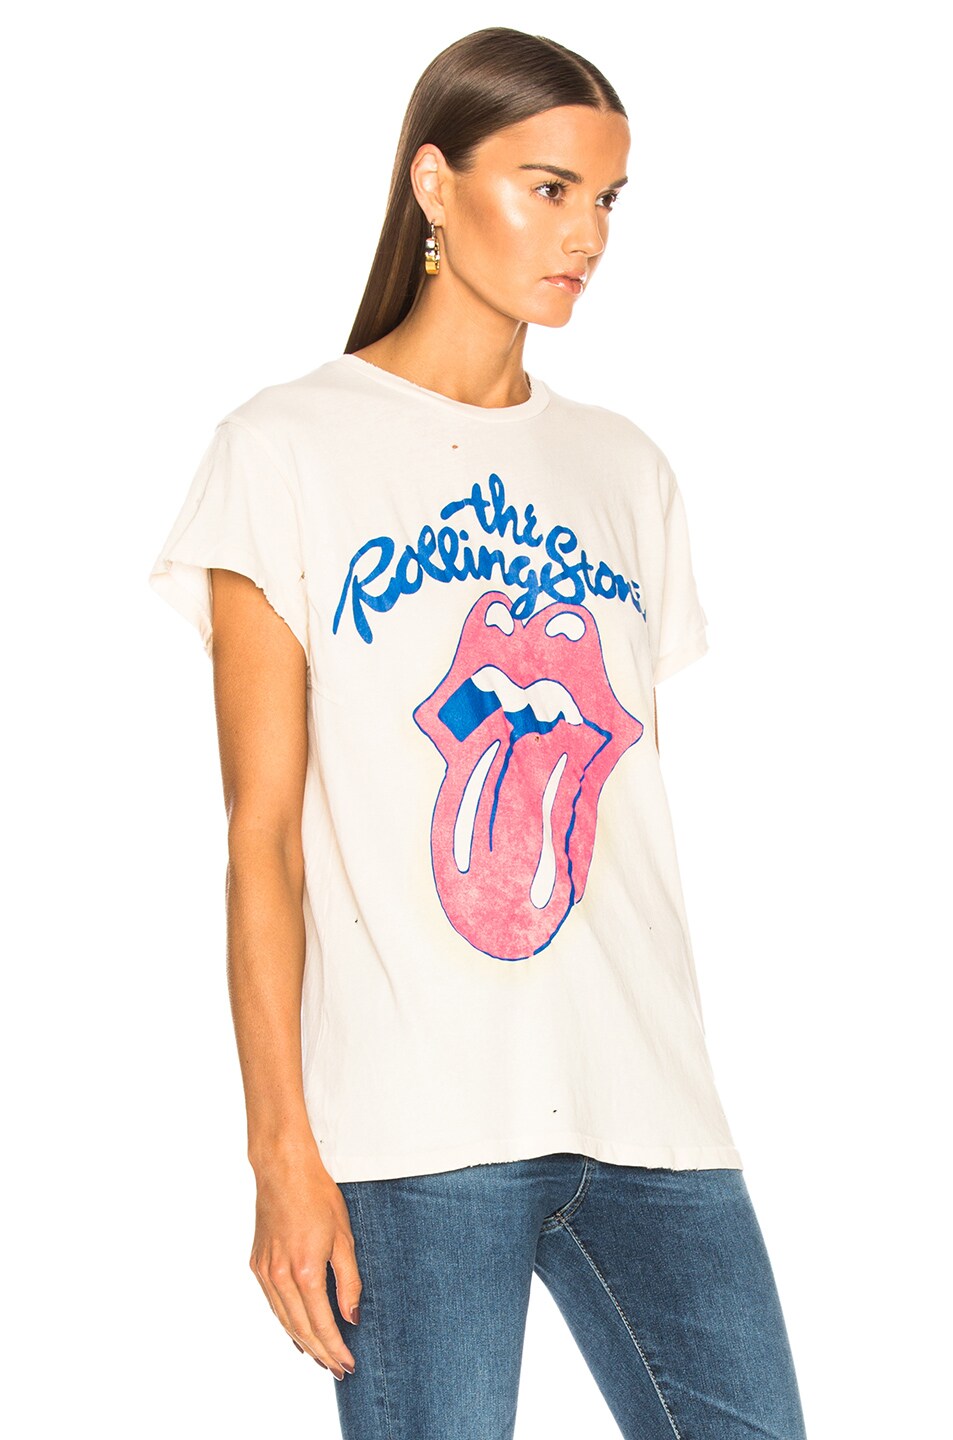 Madeworn Rolling Stones Crew Tee in Dirty White | FWRD